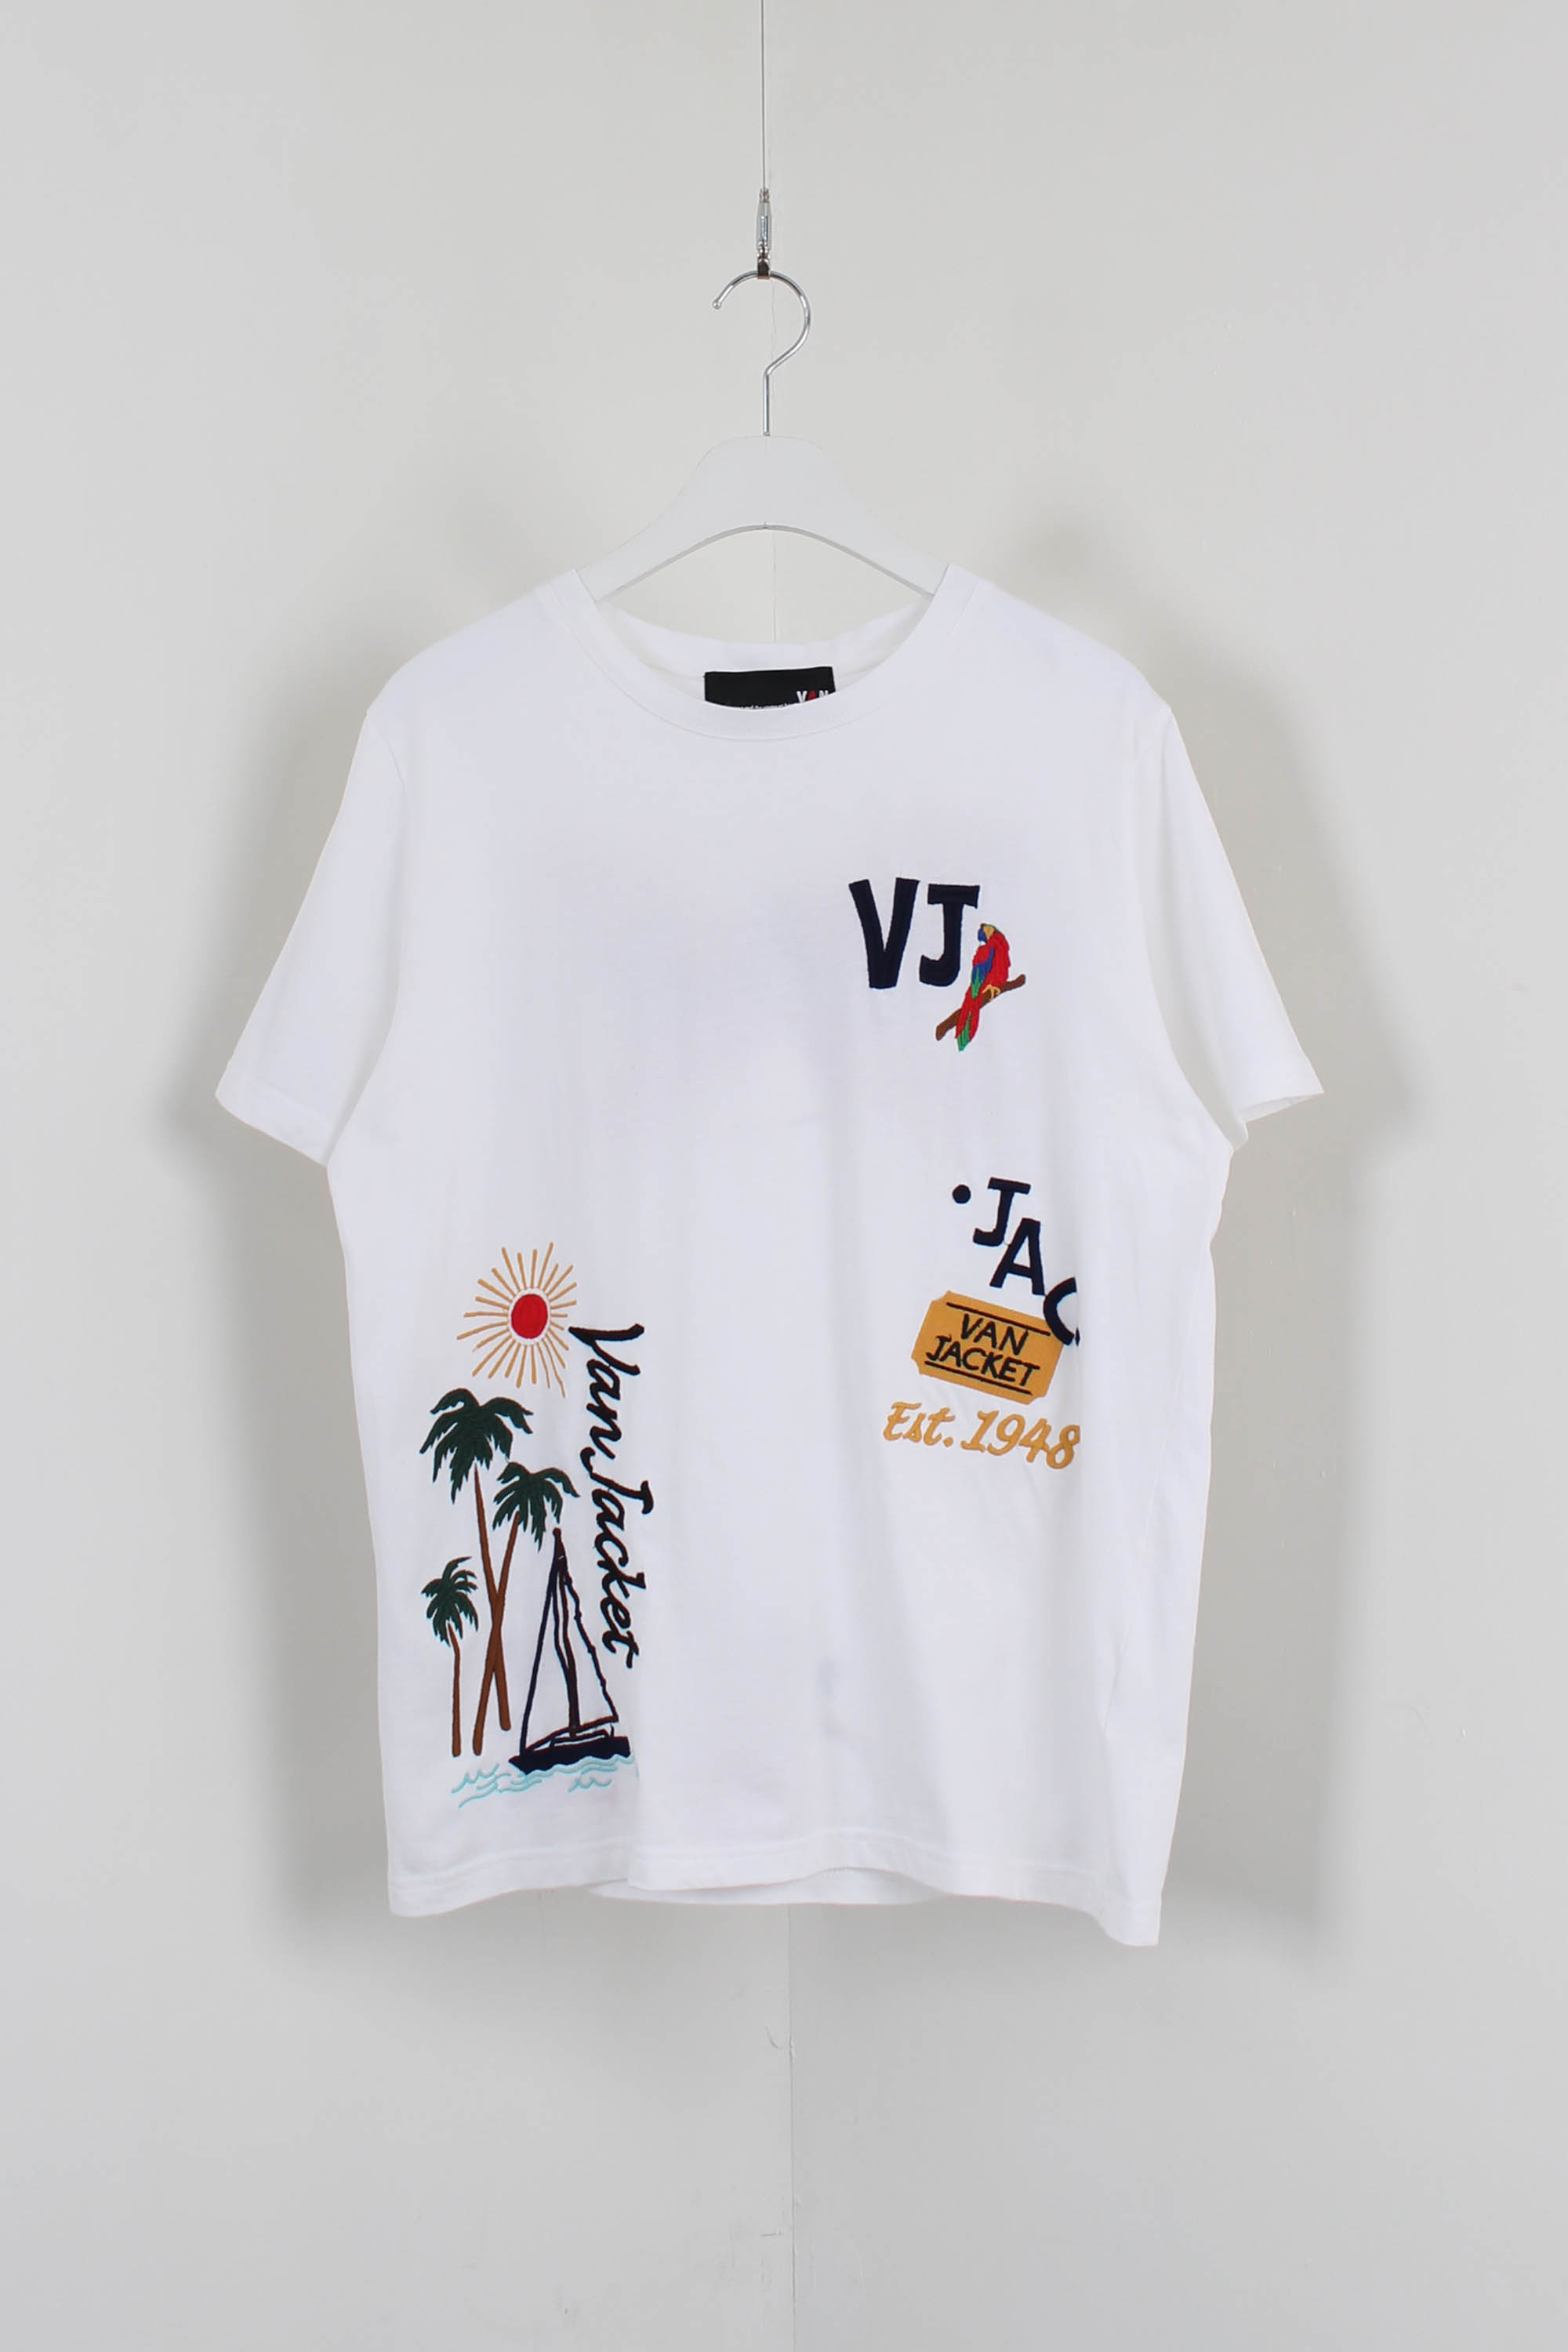 VAN jac embroidery t-shirt